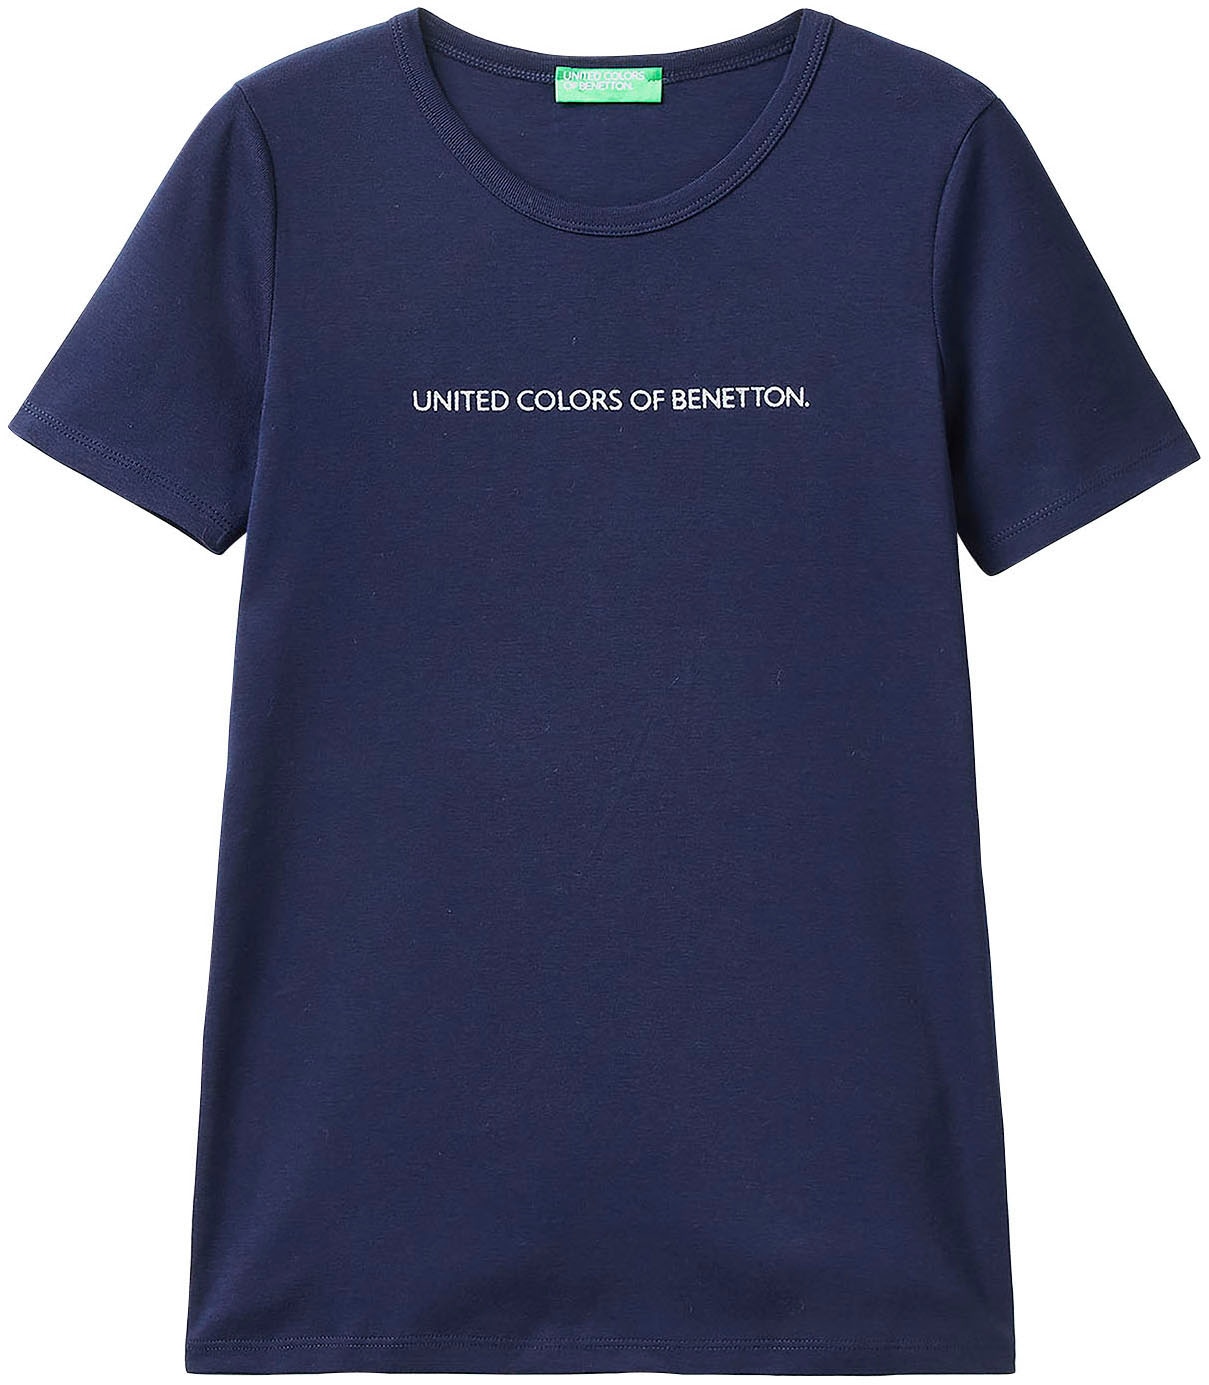 Bestseller tlg., (Set, unsere Colors | im T-Shirt, United BAUR 2 2), bestellen Doppelpack Benetton of